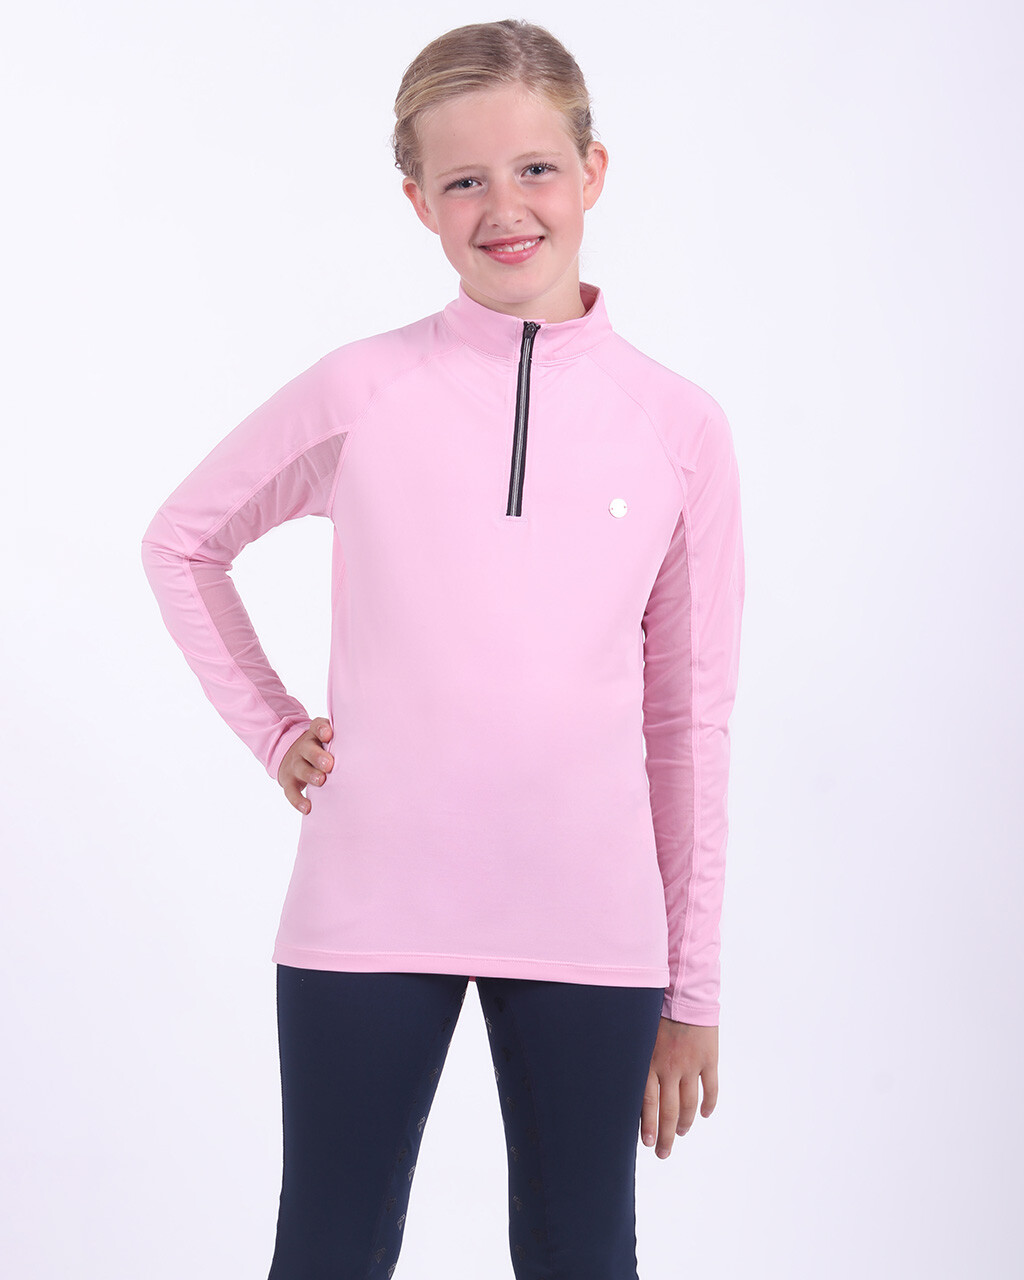 Sportshirt YVET Junior, powder pink